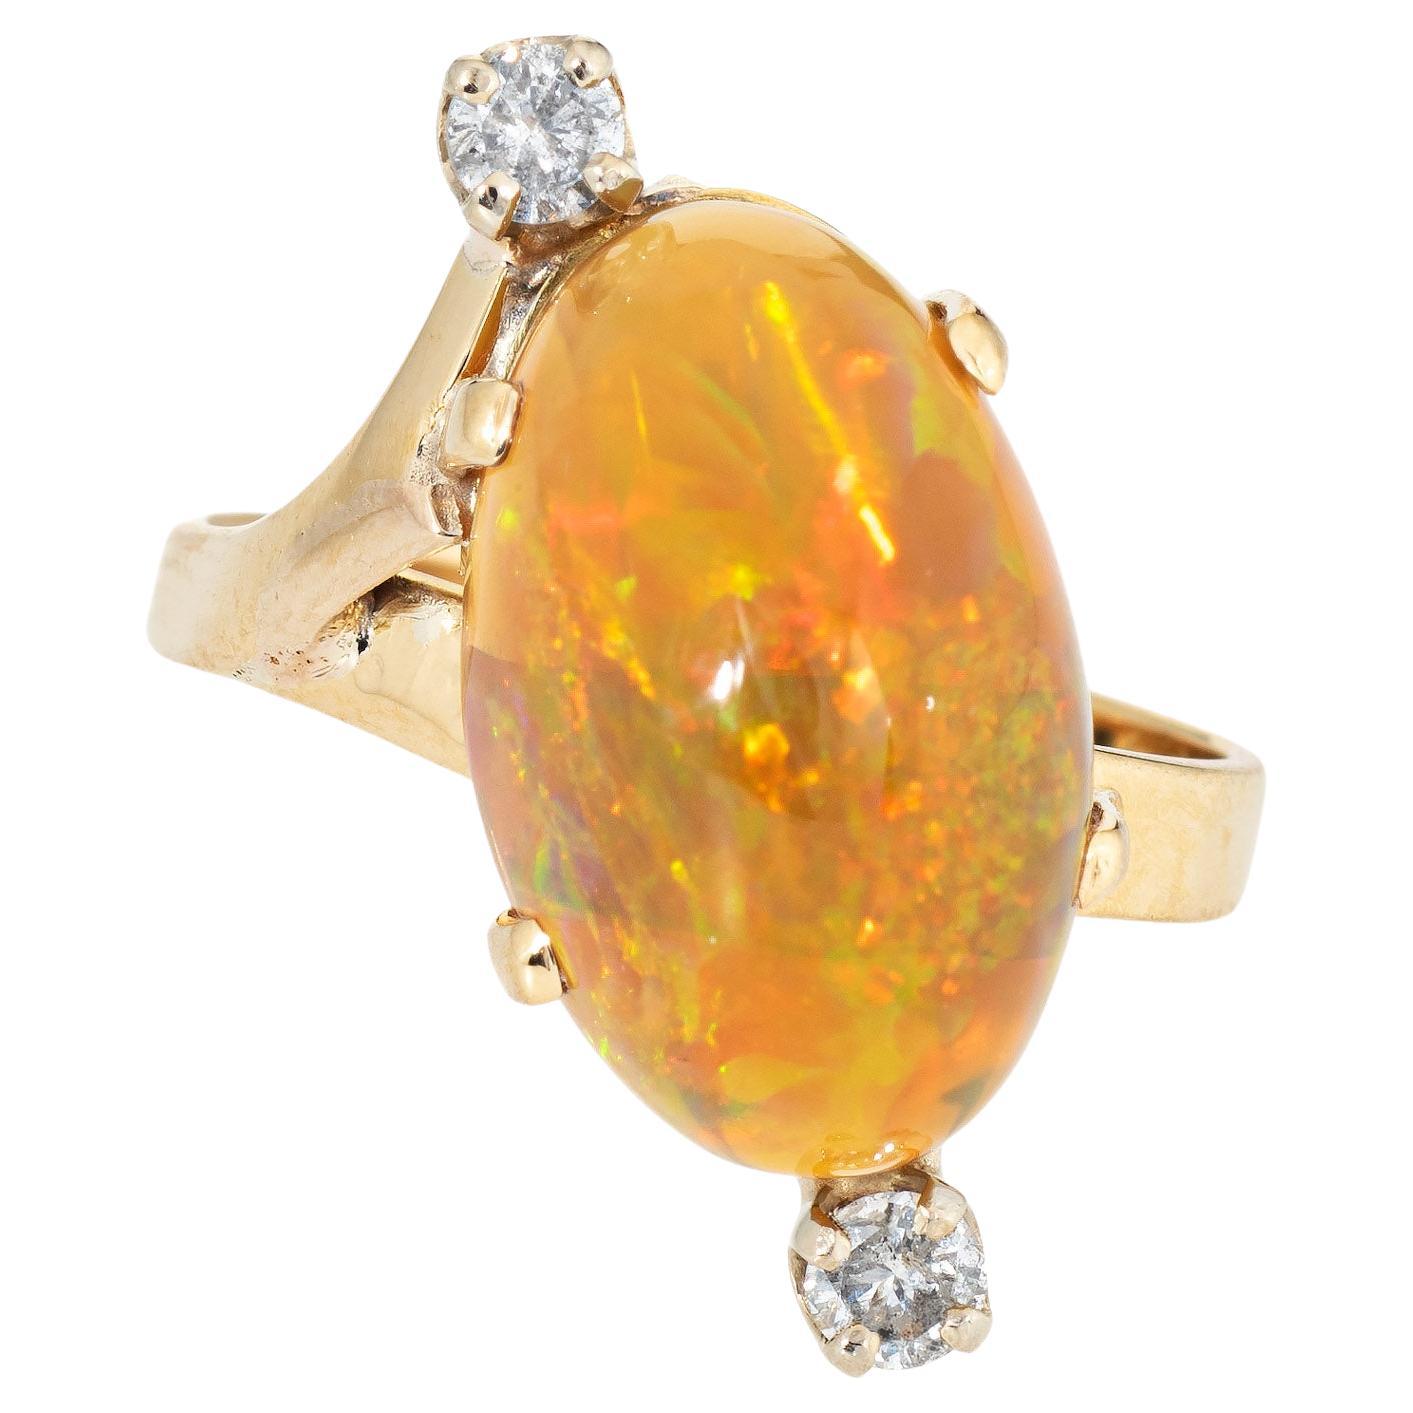 10ct Natural Ethiopian Opal Diamond Ring Estate 18k Gold Vintage Jewelry